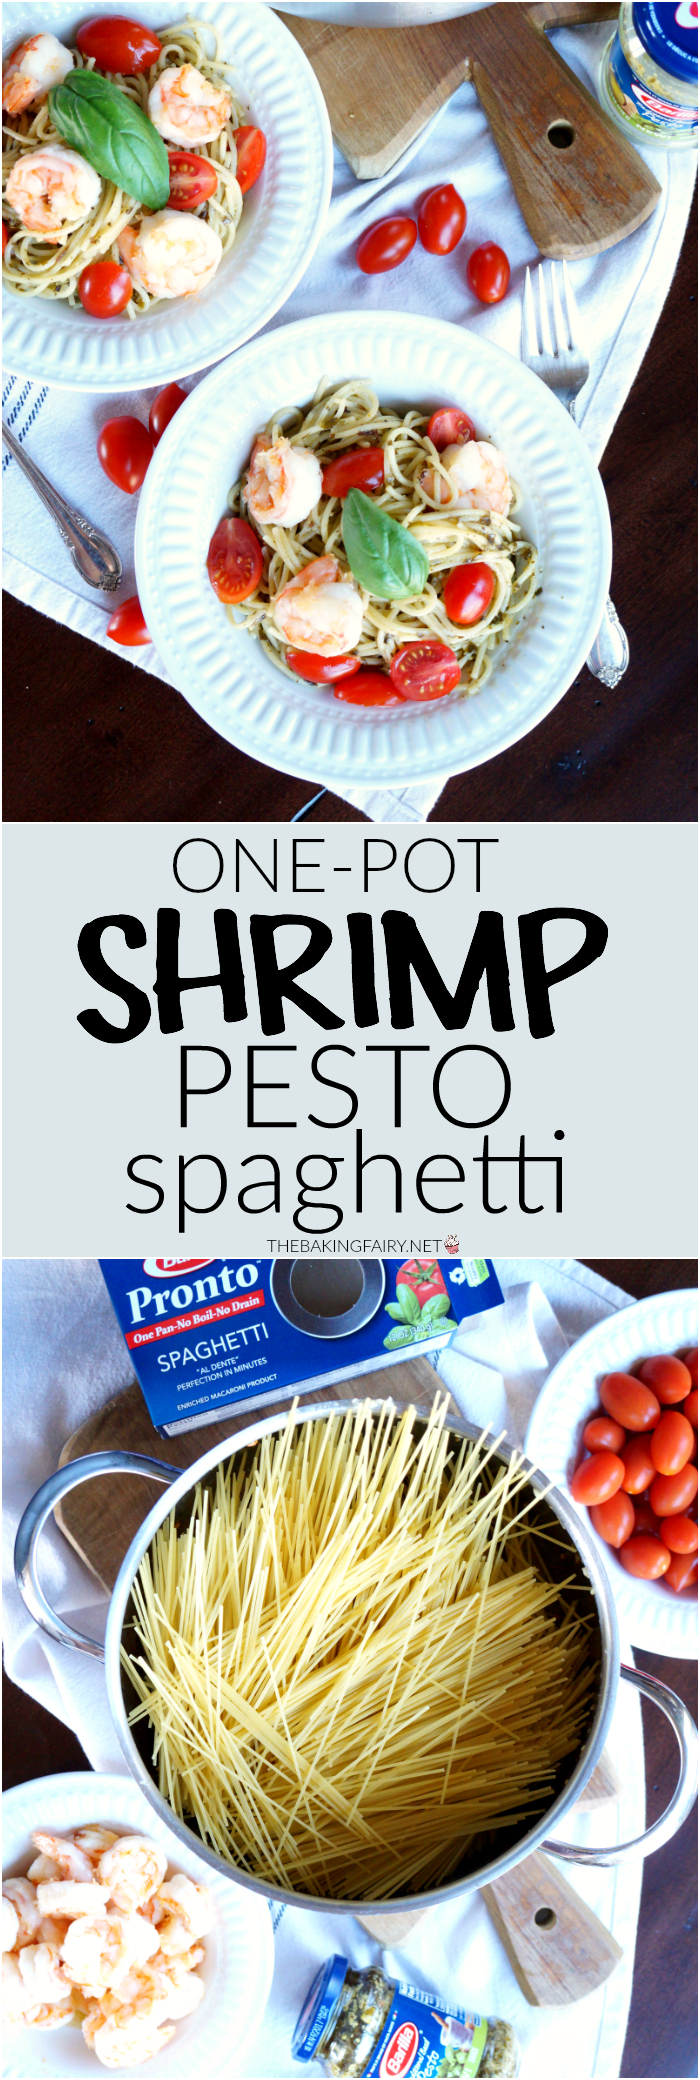 one-pot shrimp pesto spaghetti | The Baking Fairy 